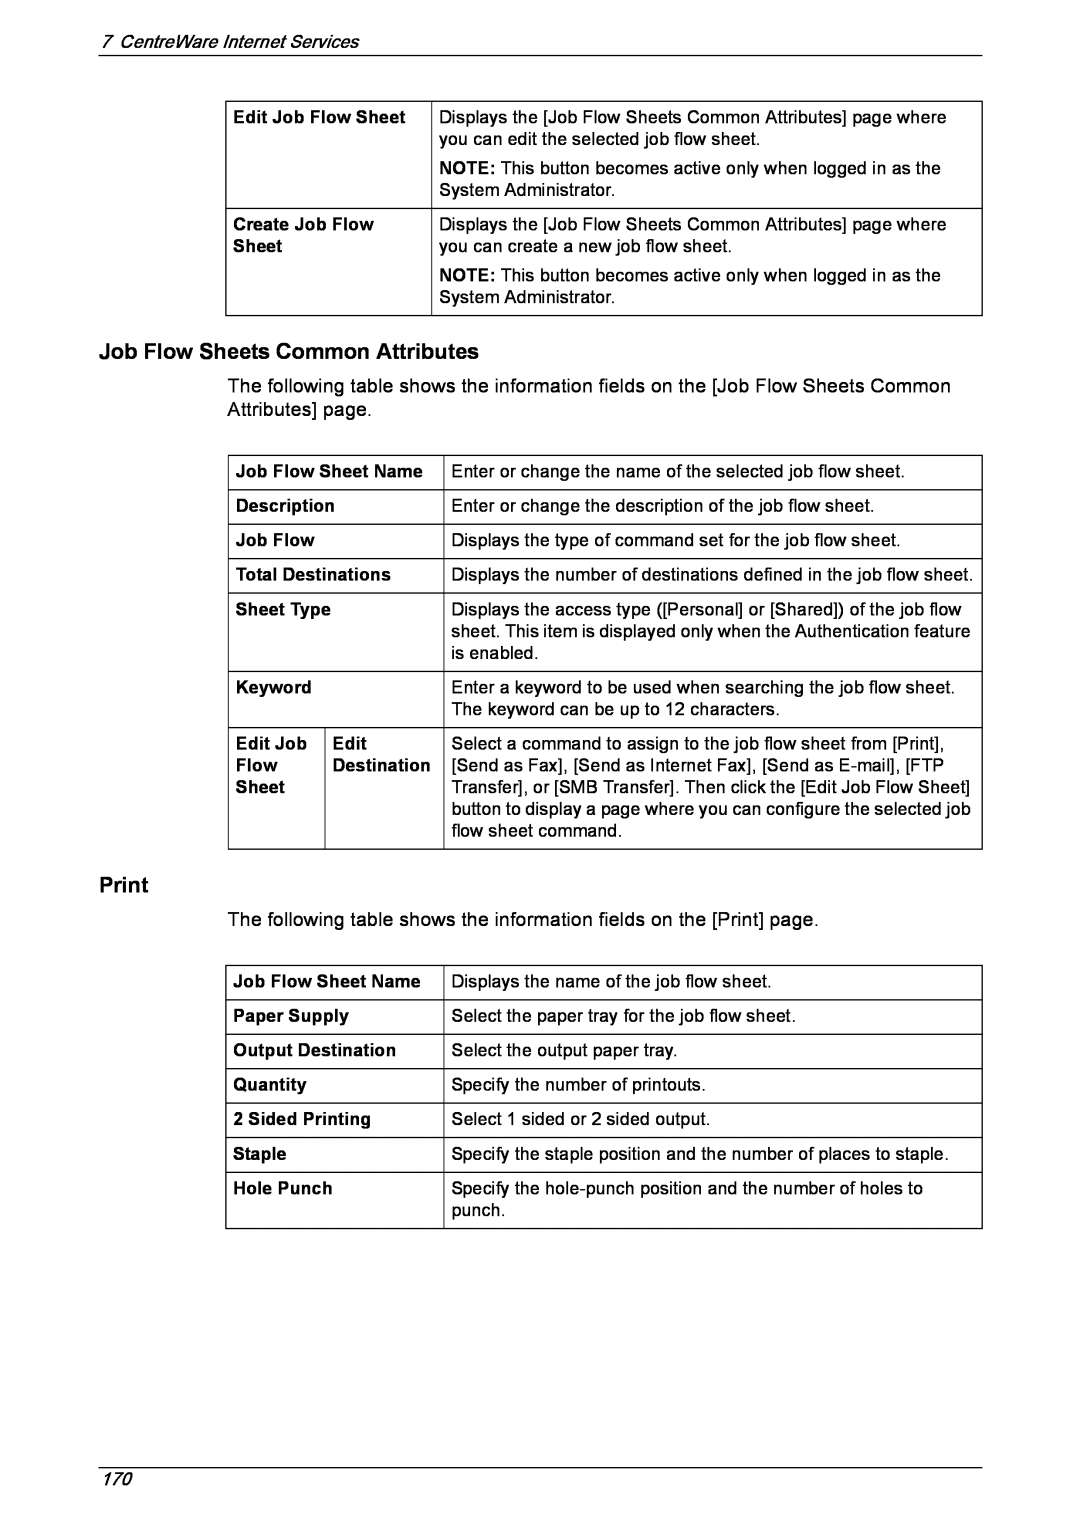 Xerox 5222 manual Job Flow Sheets Common Attributes, Print 